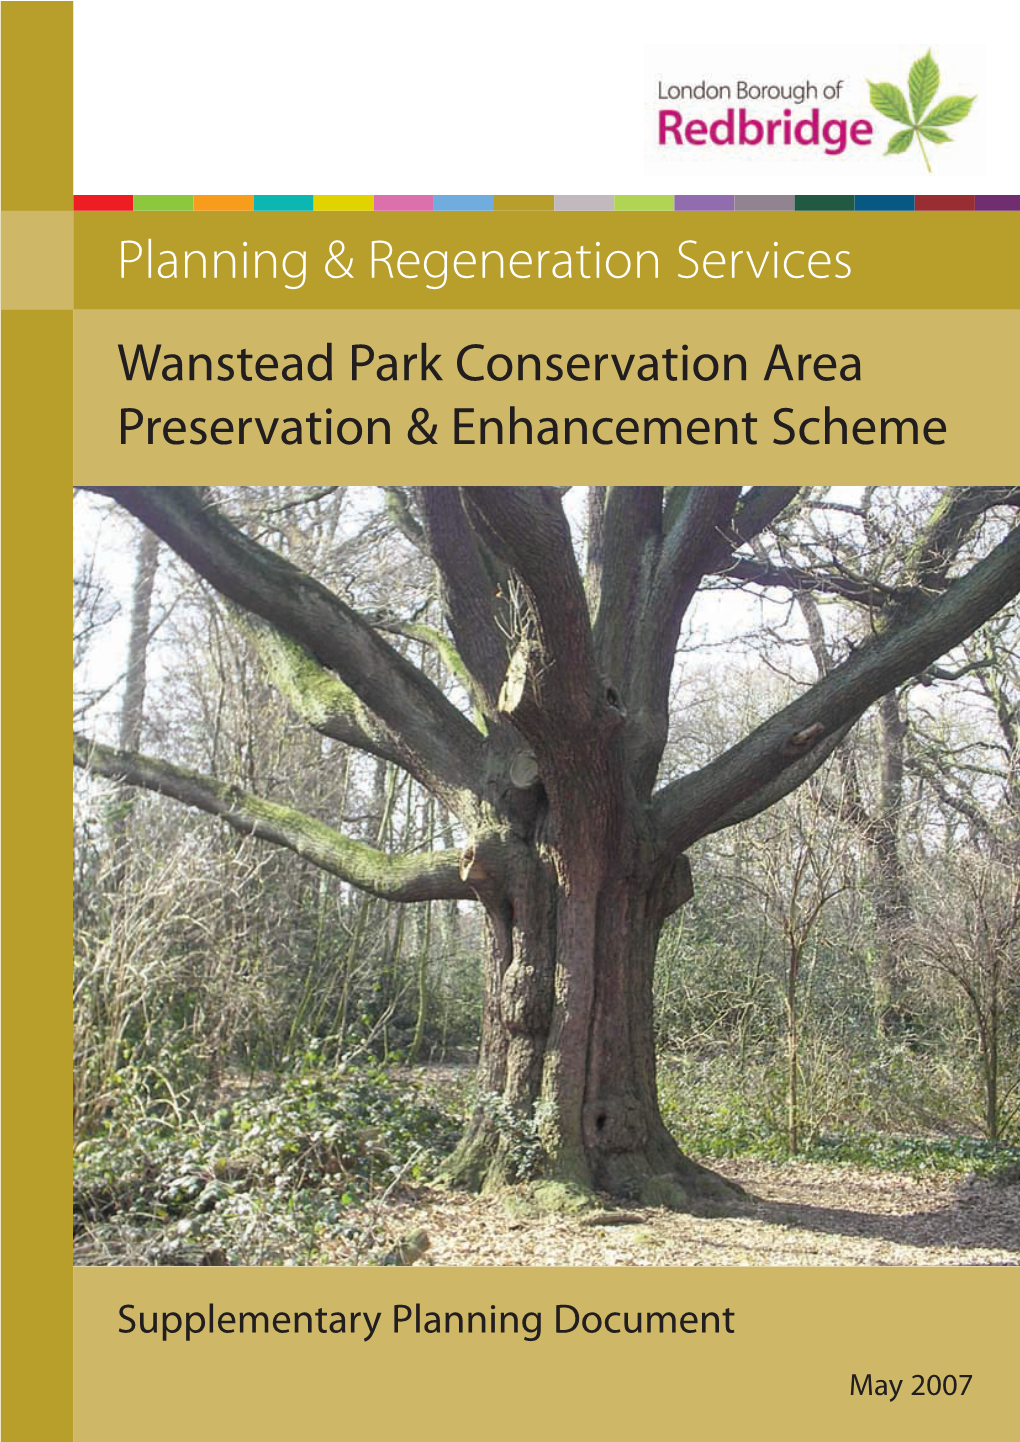 Wanstead Park Conservation Area Preservation & Enhancement Scheme